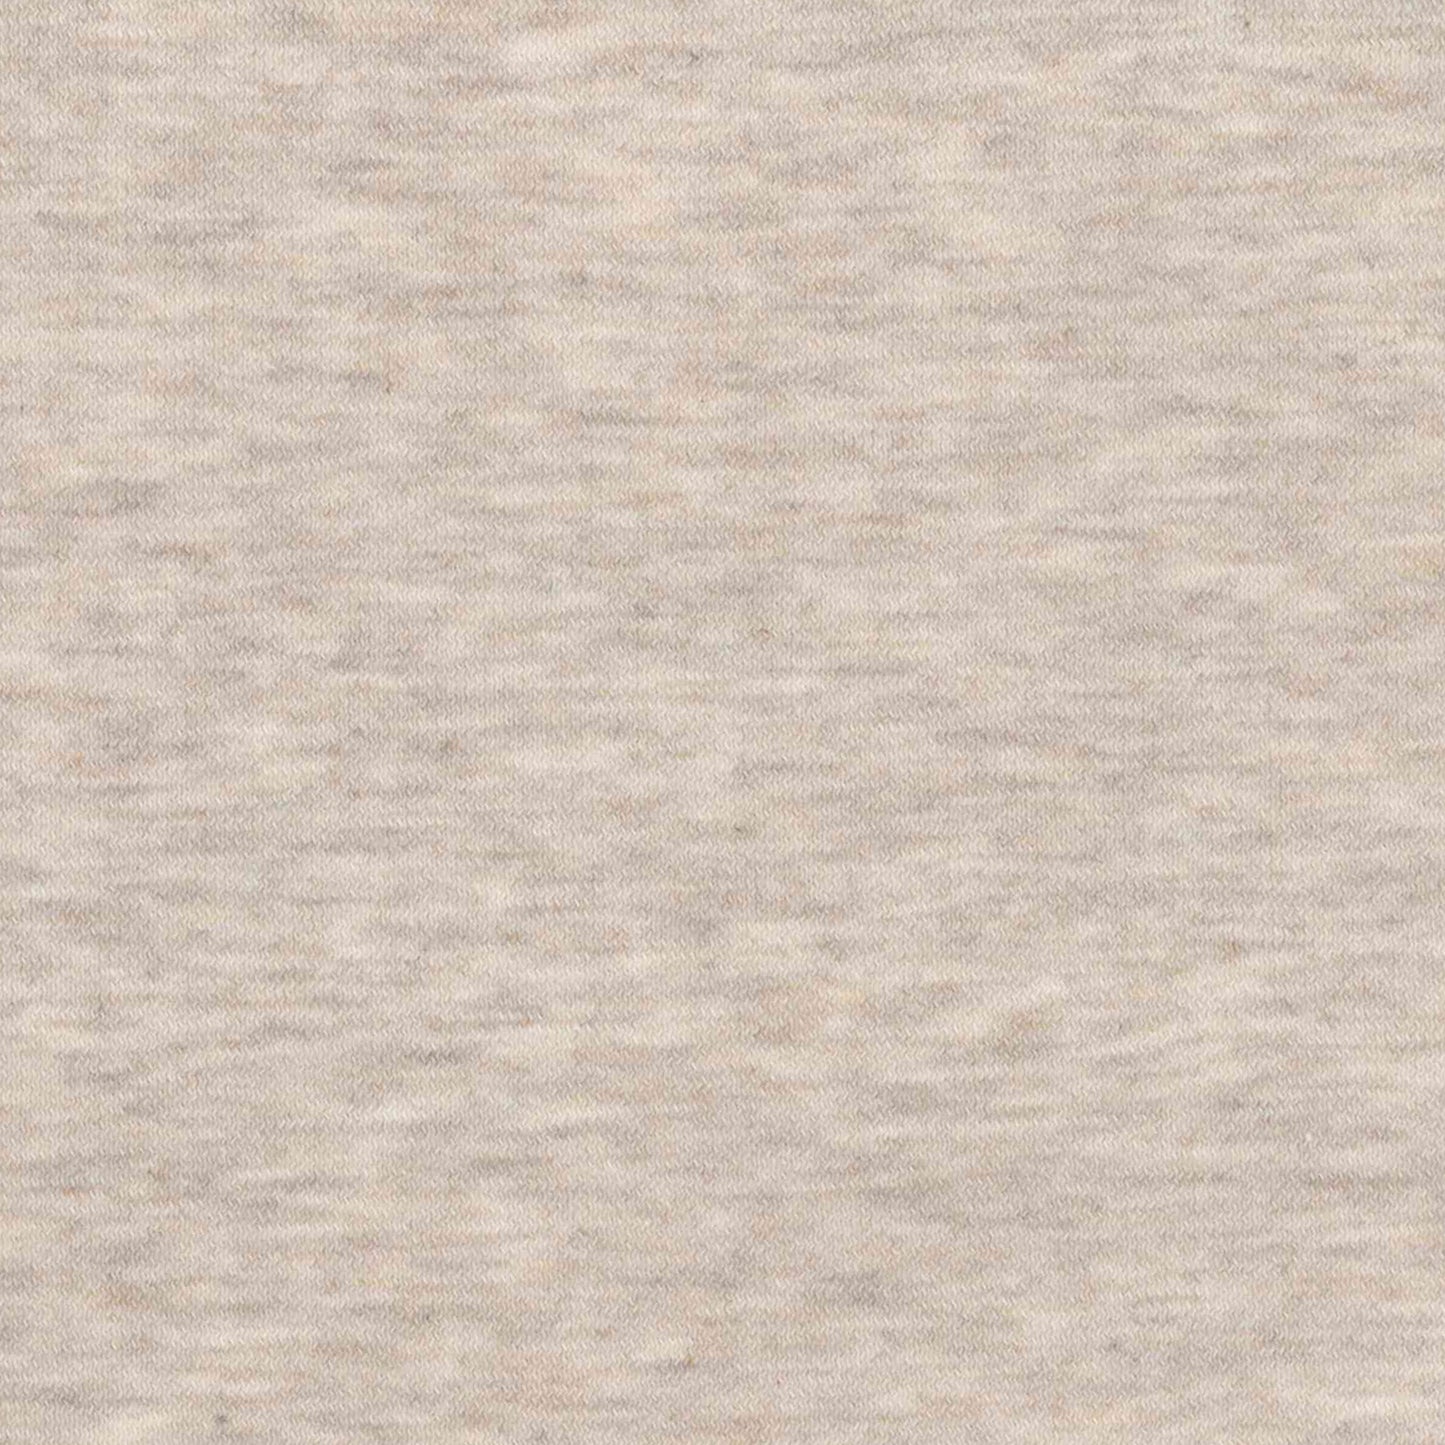 100% Organic Cotton Single Jersey - Beige Melange (2SP240